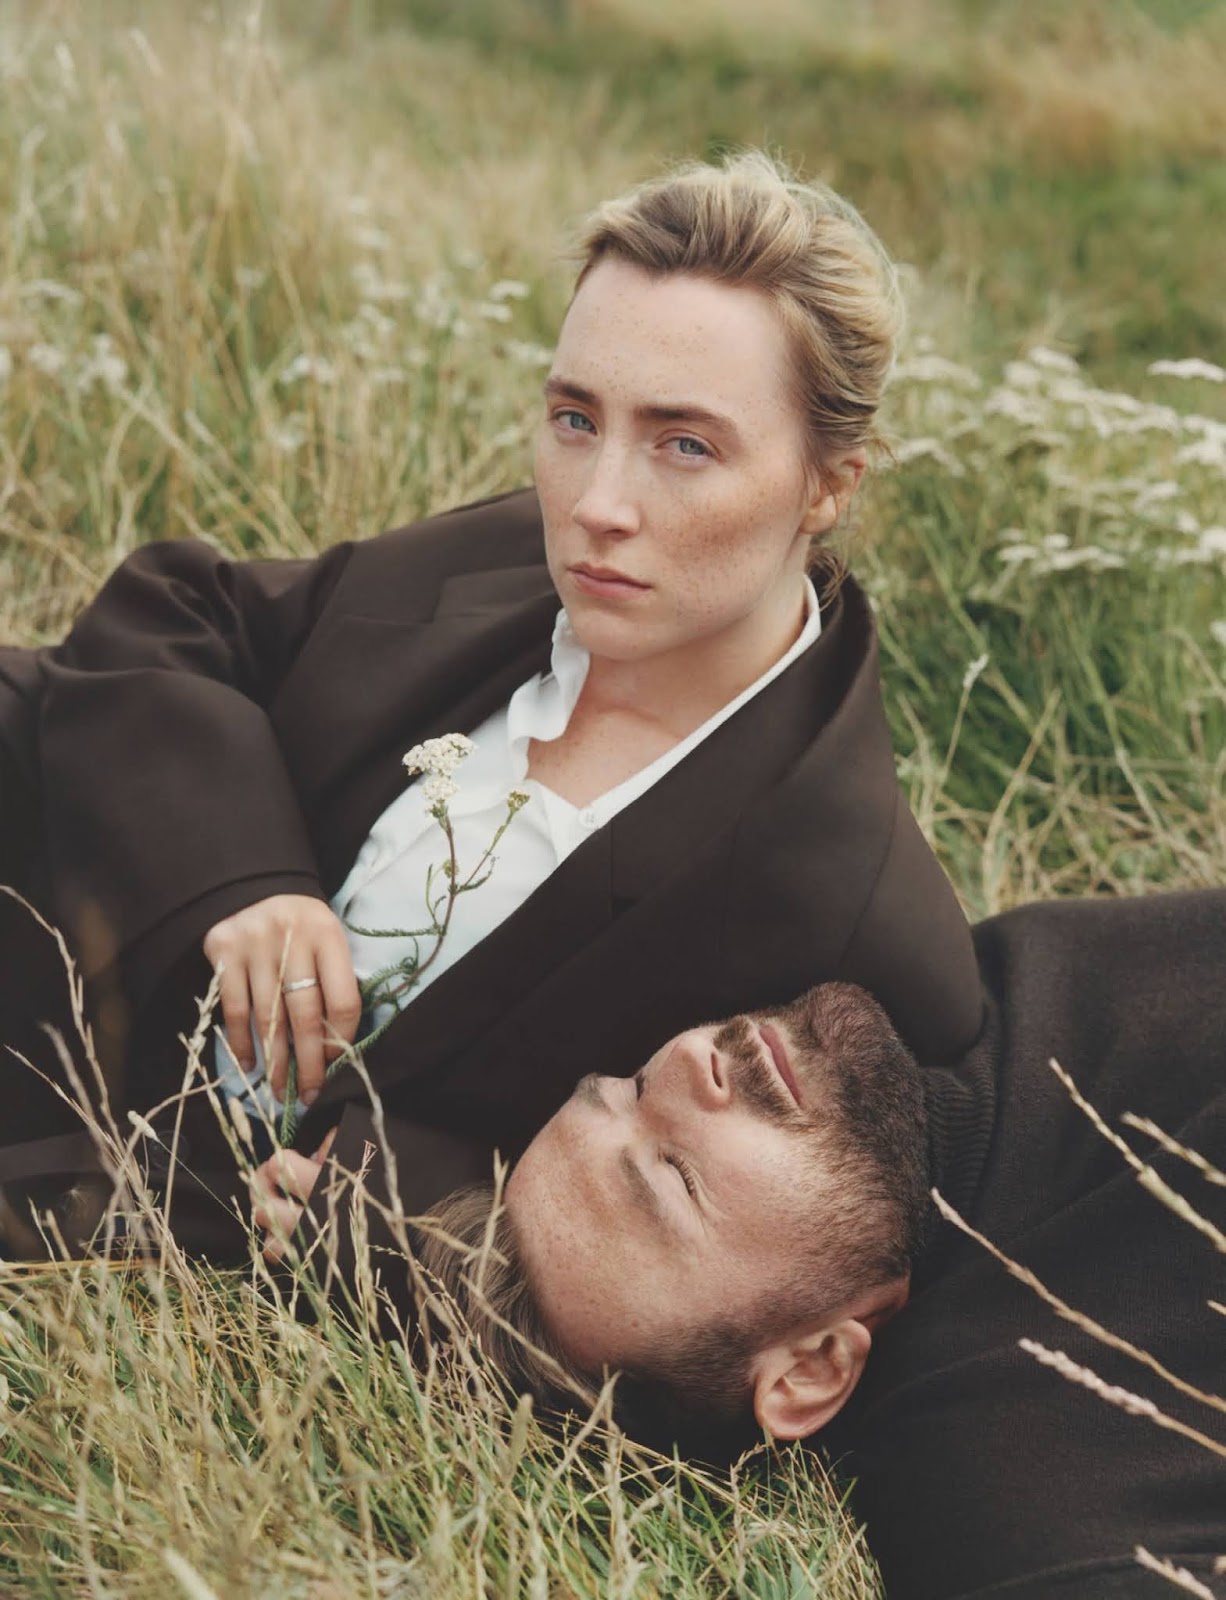 SMILE: Saoirse Ronan & James McArdle in Vogue UK November 2021 by Ben Weller